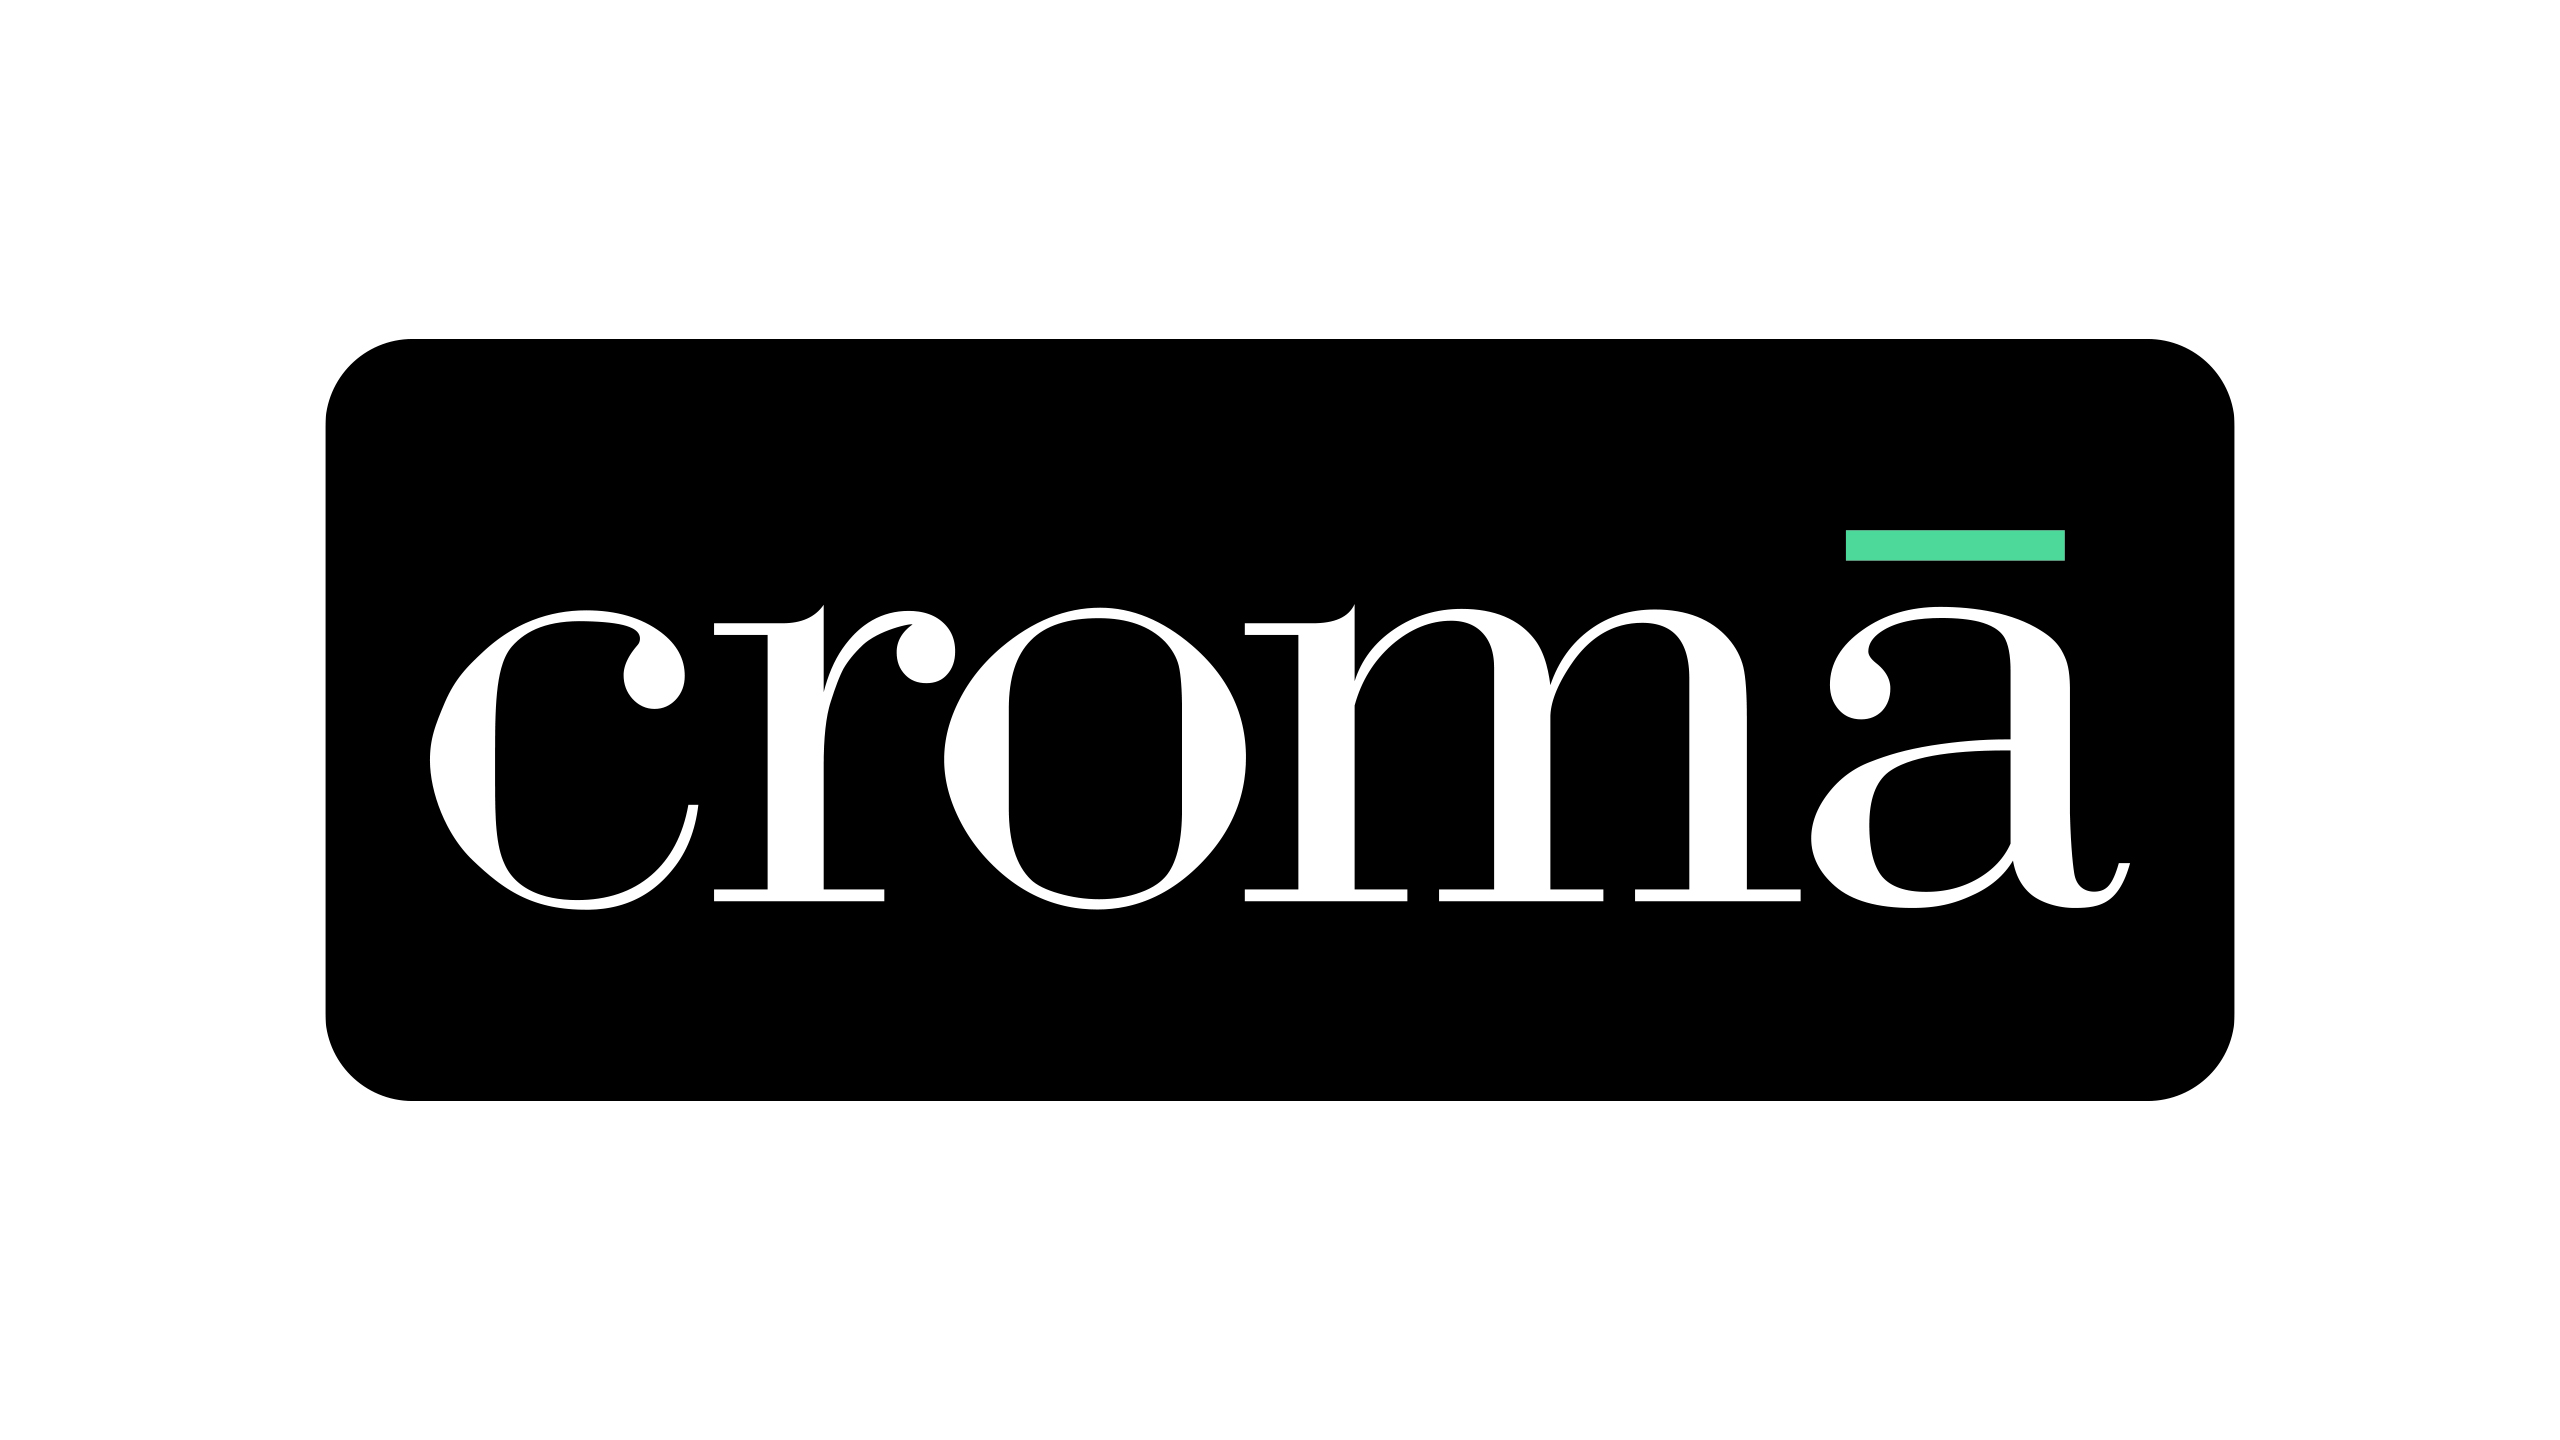 Croma logo